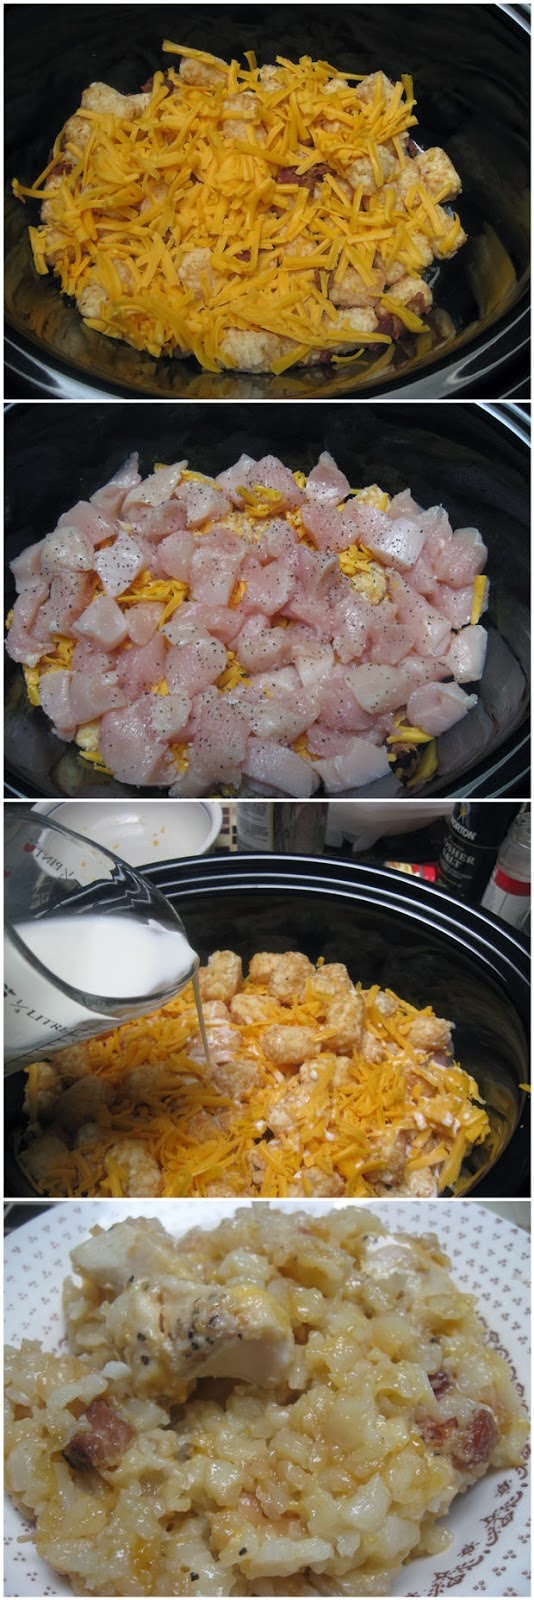 Cheesy-Chicken-Tater-Tot-Casserole-in-the-Crockpot-Recipe